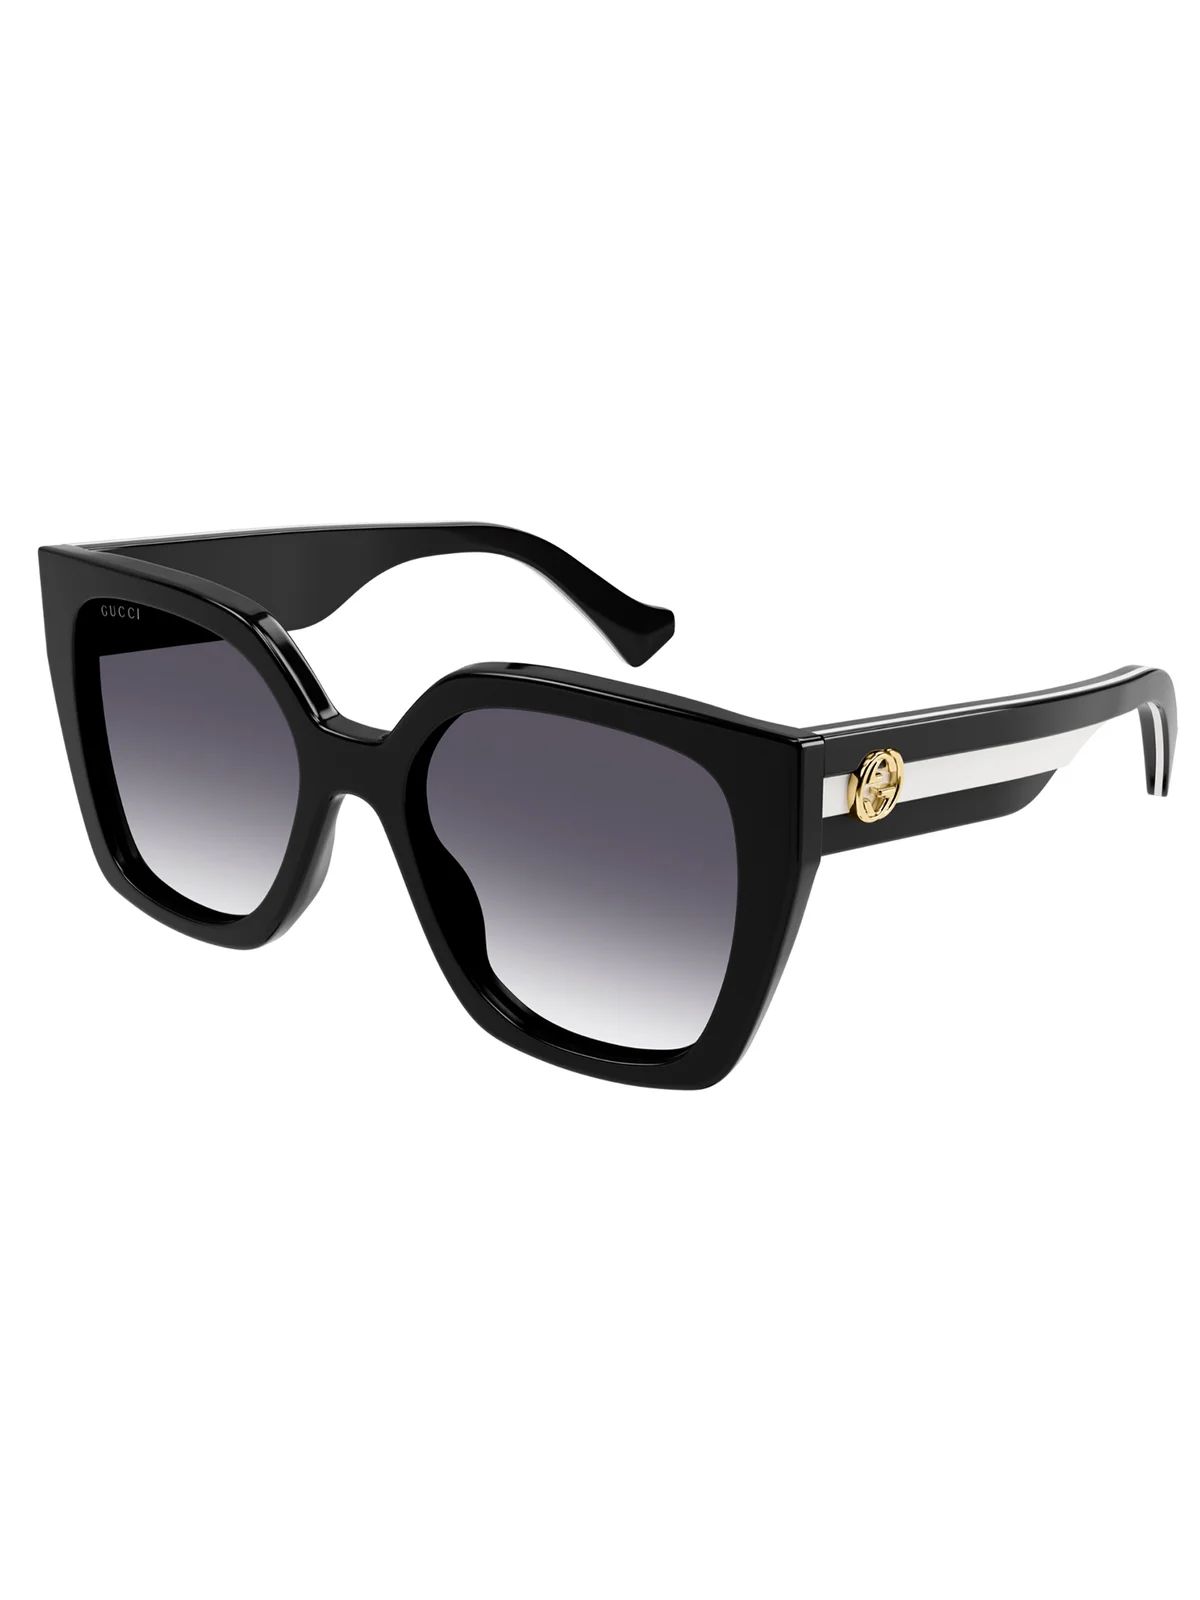 Gucci Eyewear Butterfly Frame Sunglasses | Cettire Global